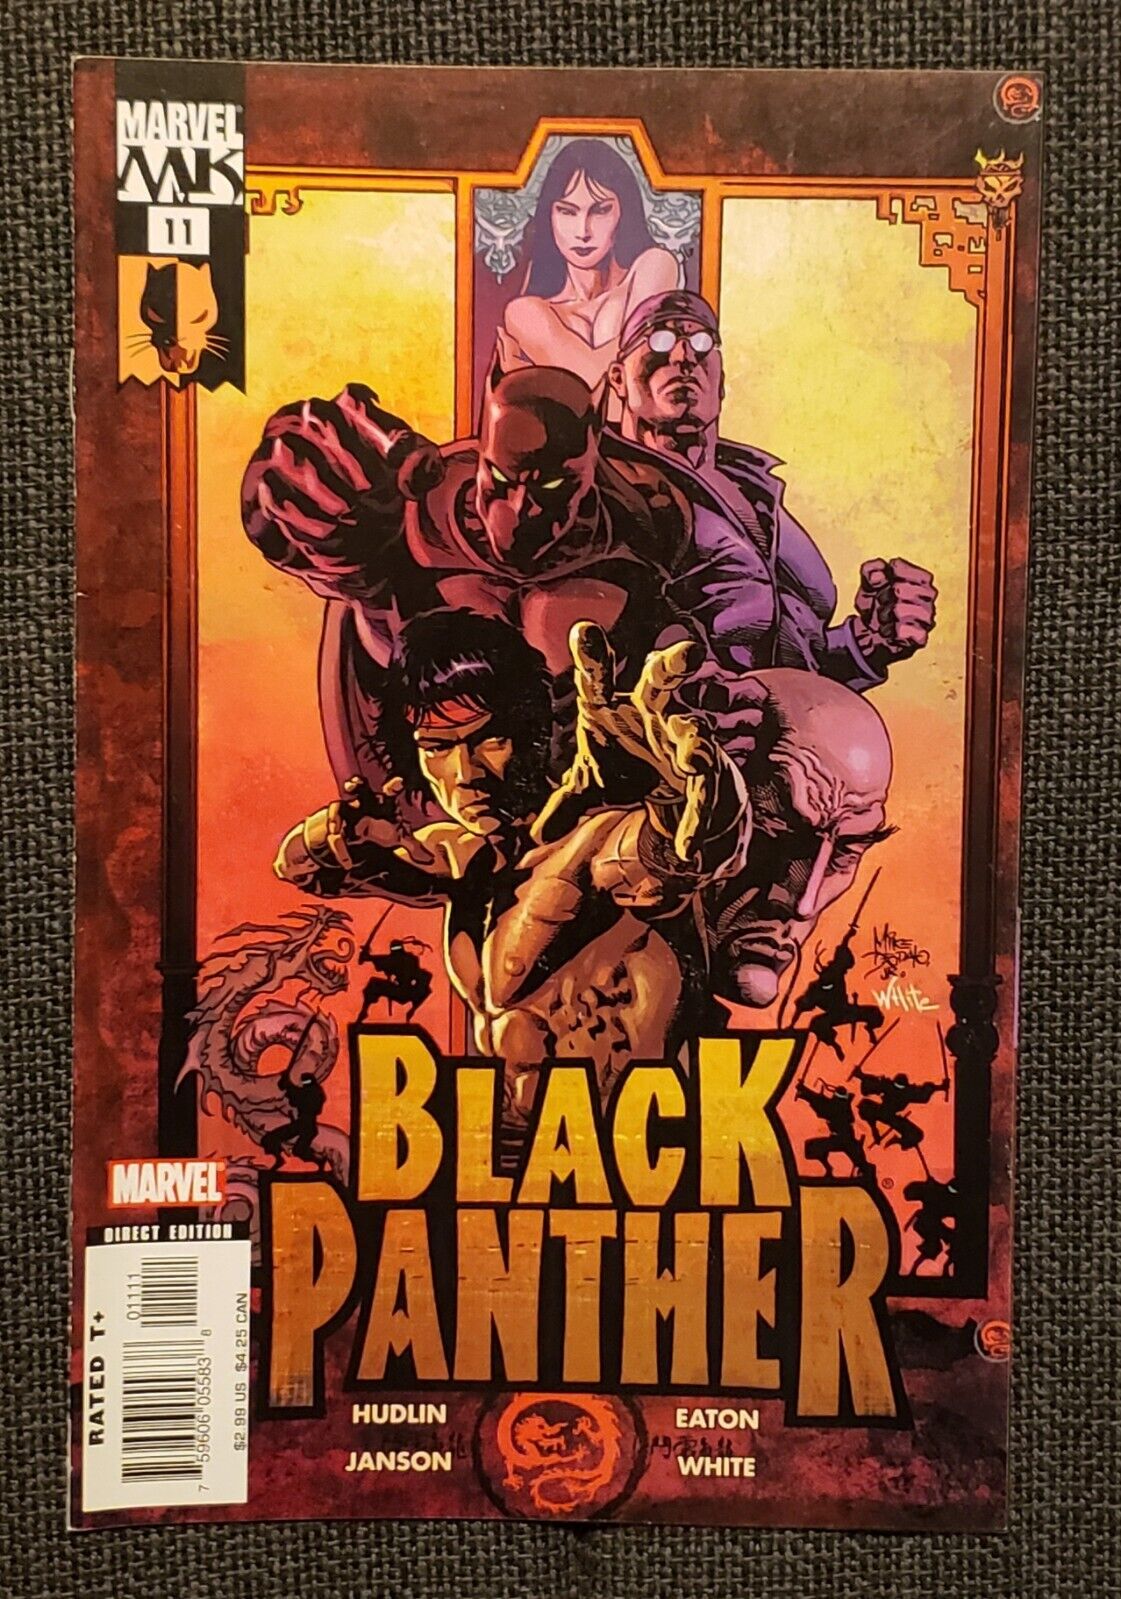 Black Panther #11 Marvel 2005 Marvel Knights Reginald Hudlin & Scot Eaton